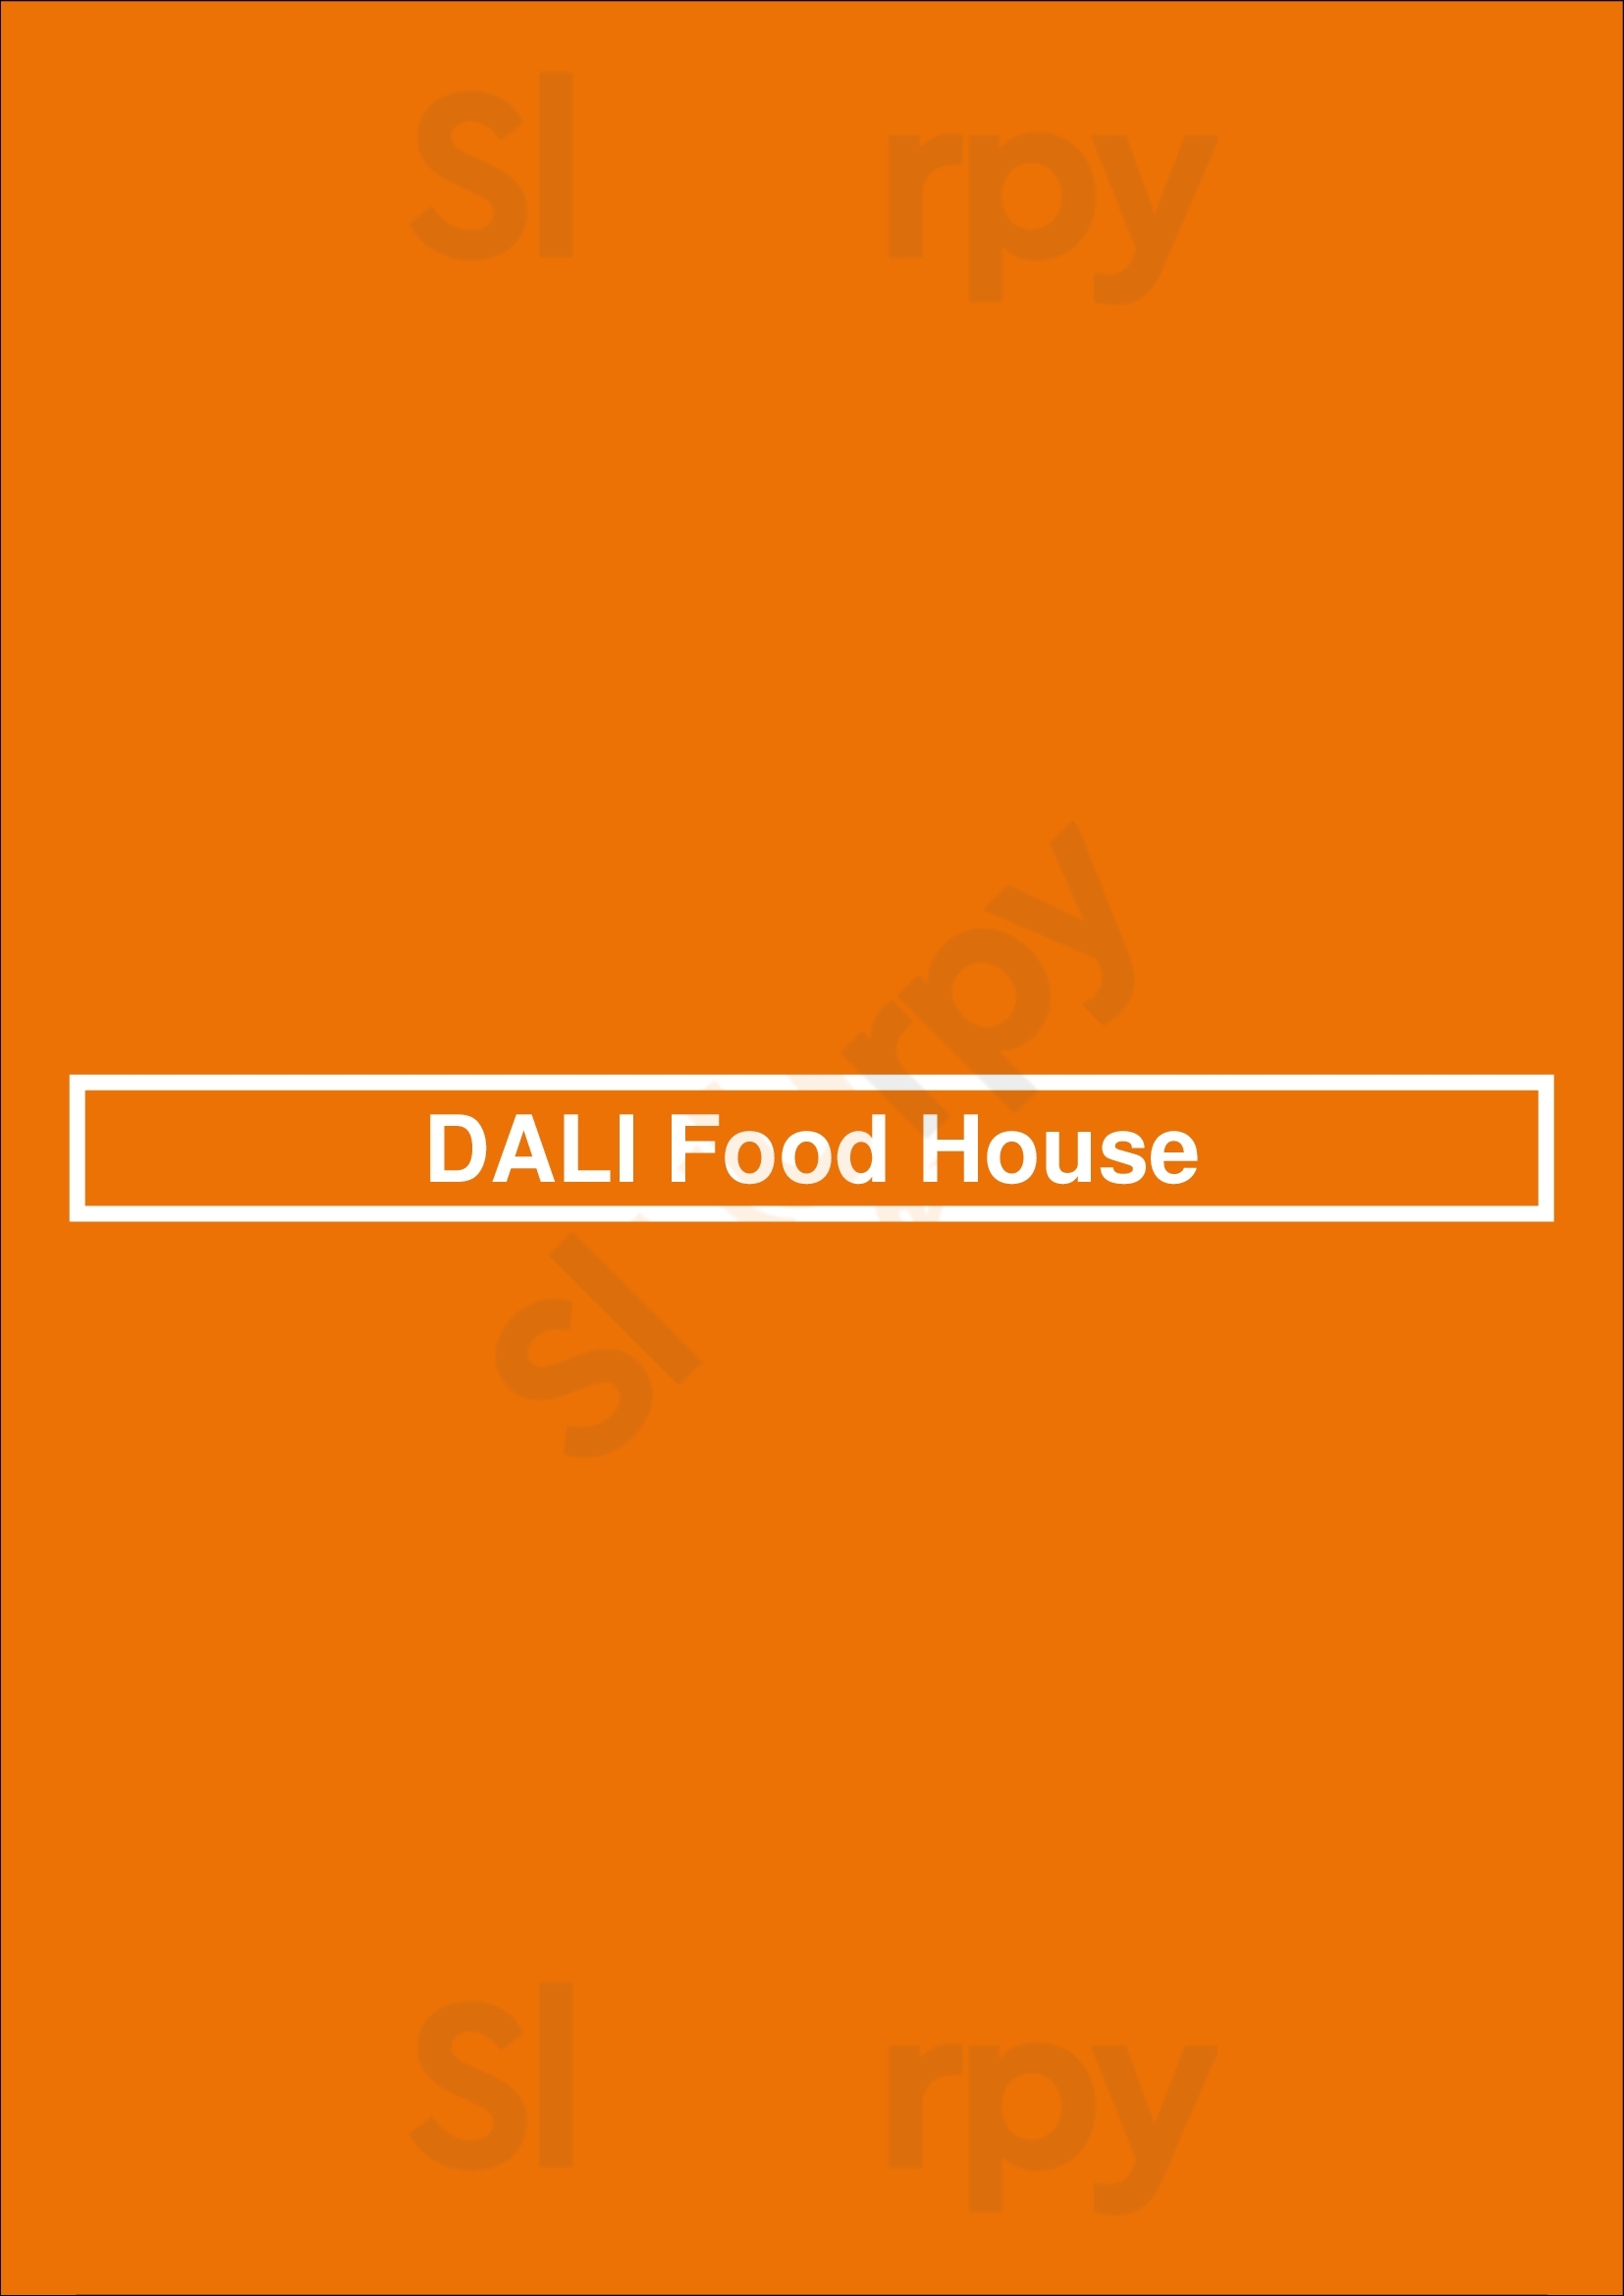 Dali Food House Vila Nova de Gaia Menu - 1